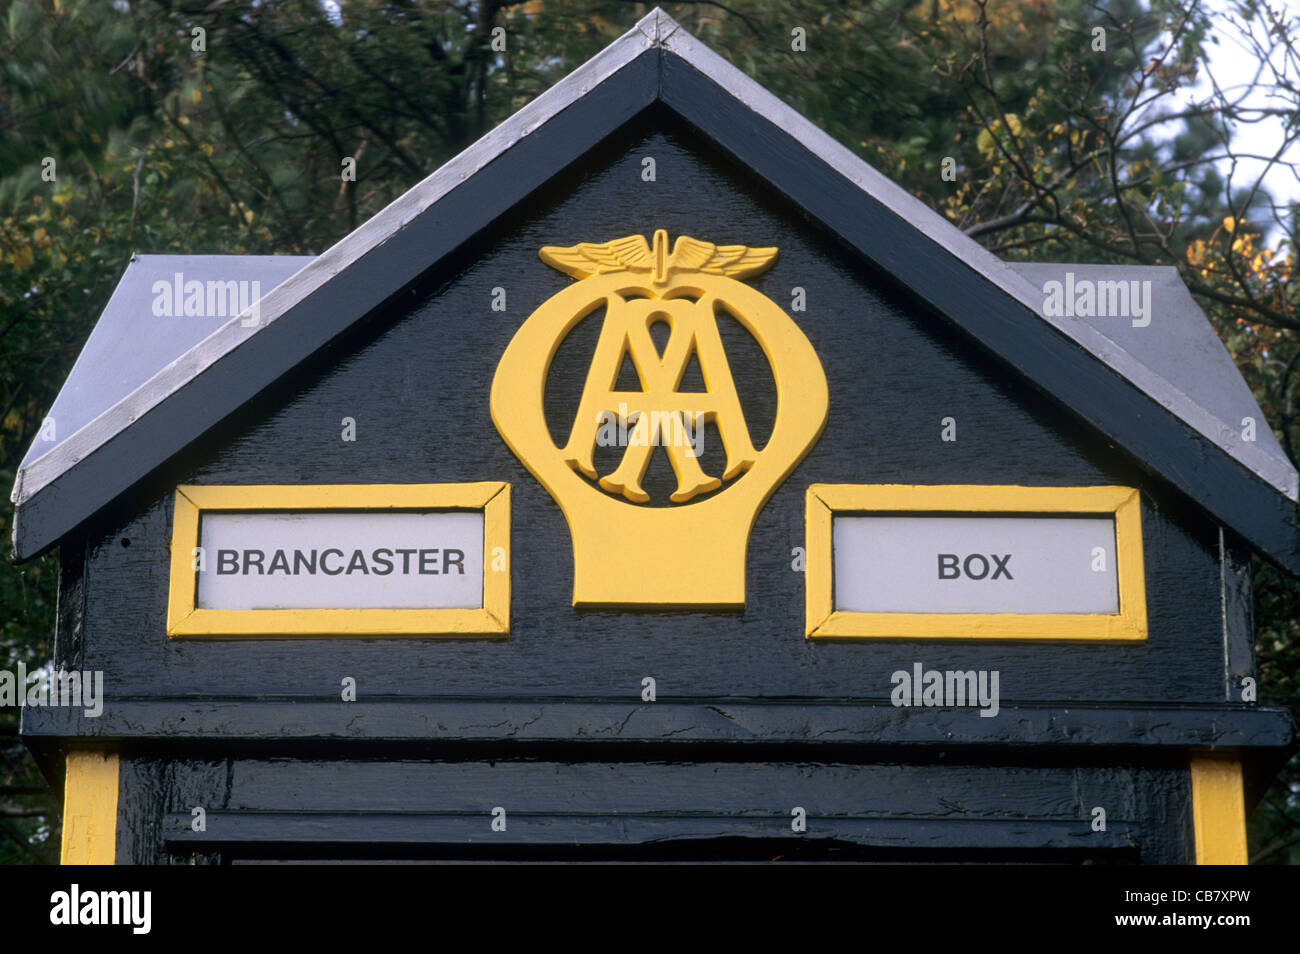 AA, Automibile Association Box, Brancaster, England UK Logo Logos Straßenrand Boxen Englisch Stockfoto